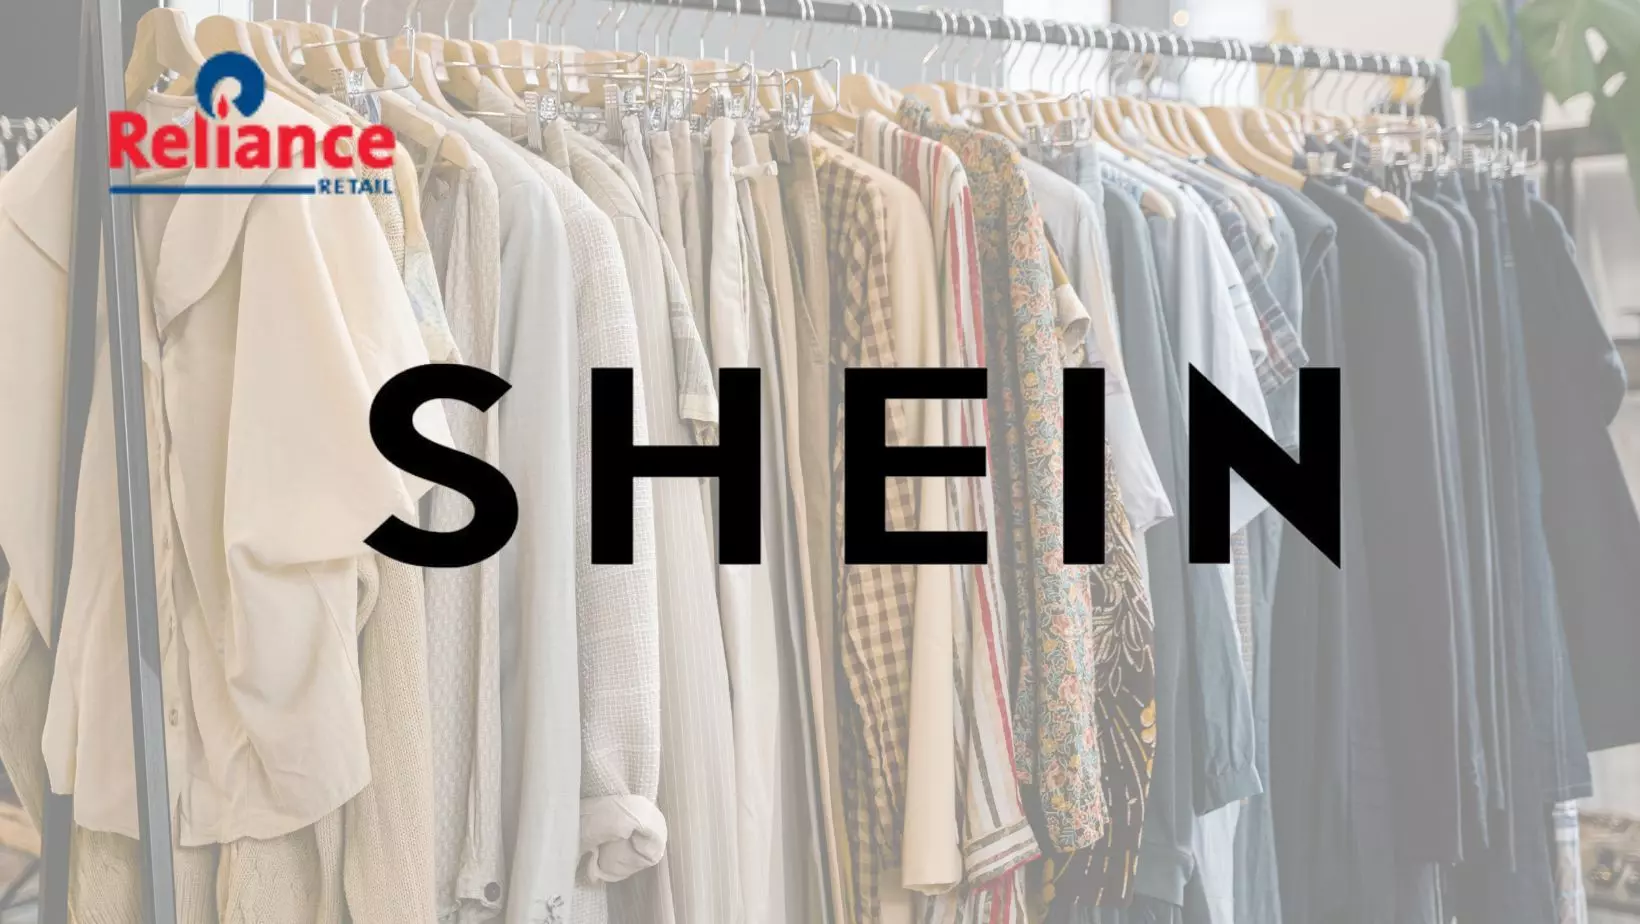 reliance retail logo and shein logo